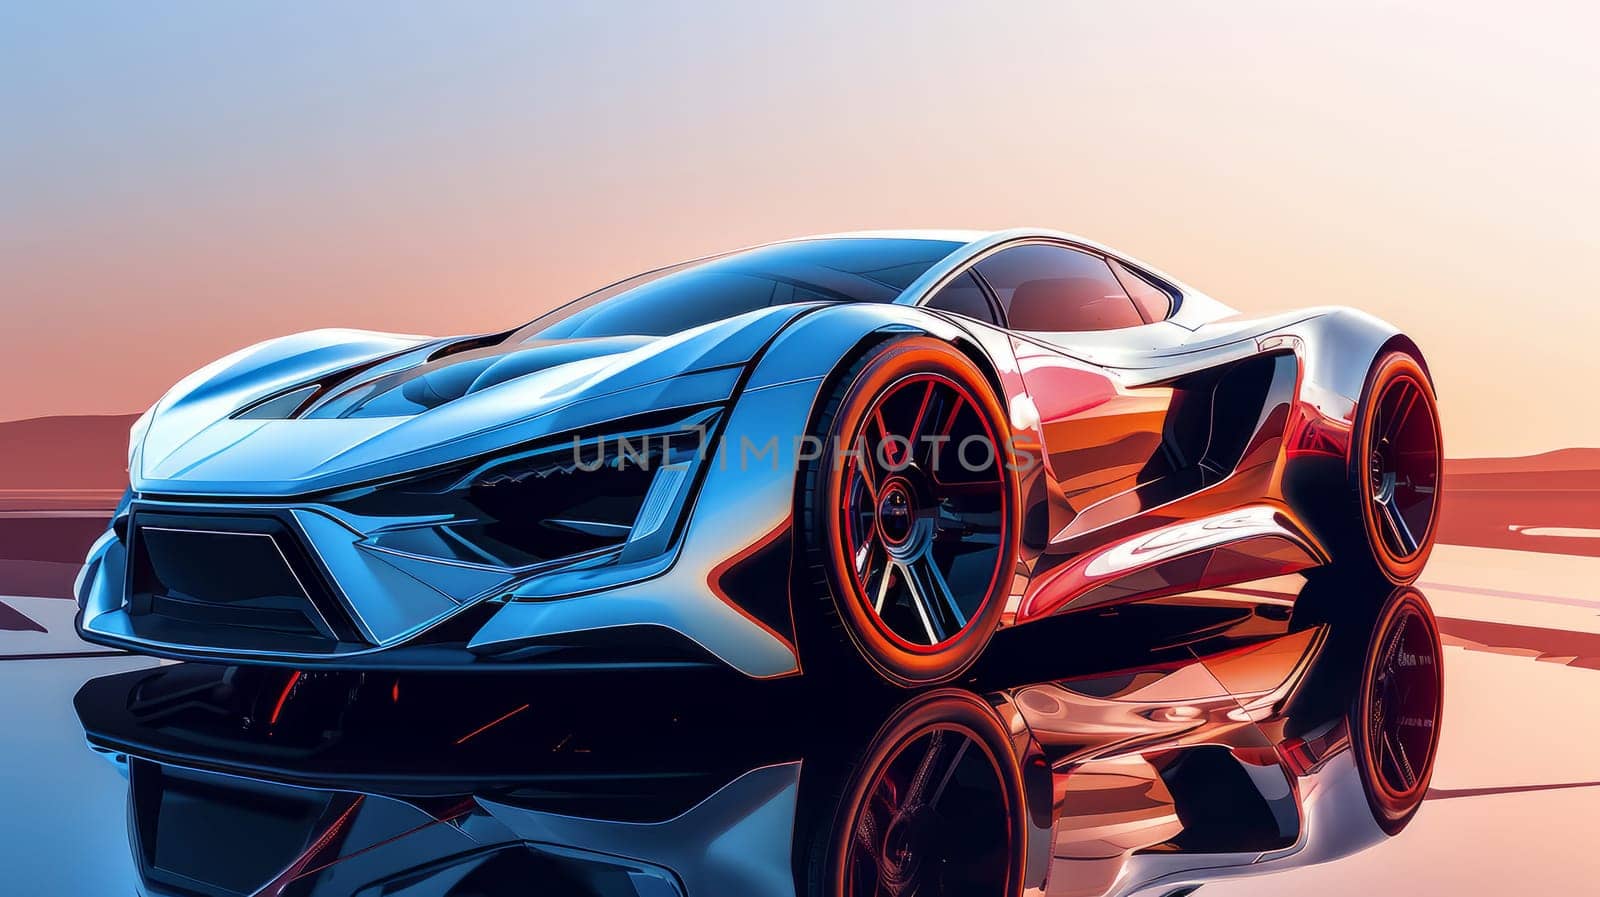 Digital concept car in a futuristic style. Future luxury sports car concept AI